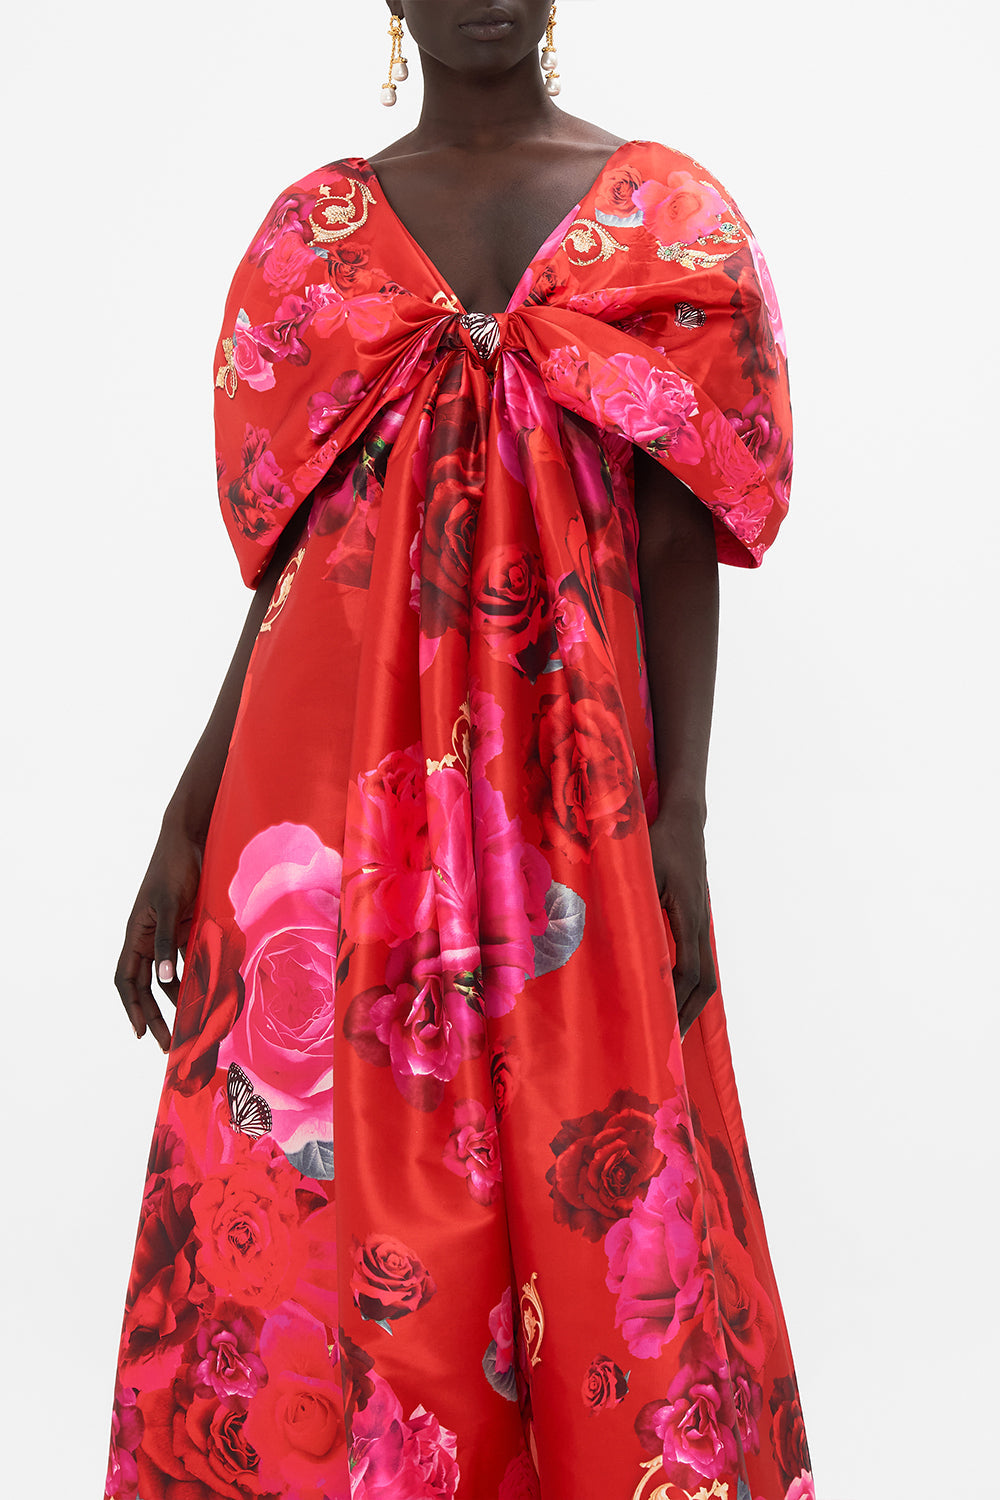 Crop view of model wearing CAMILLA taffeta maxi dress with bow detail in An Italian Rosa print  